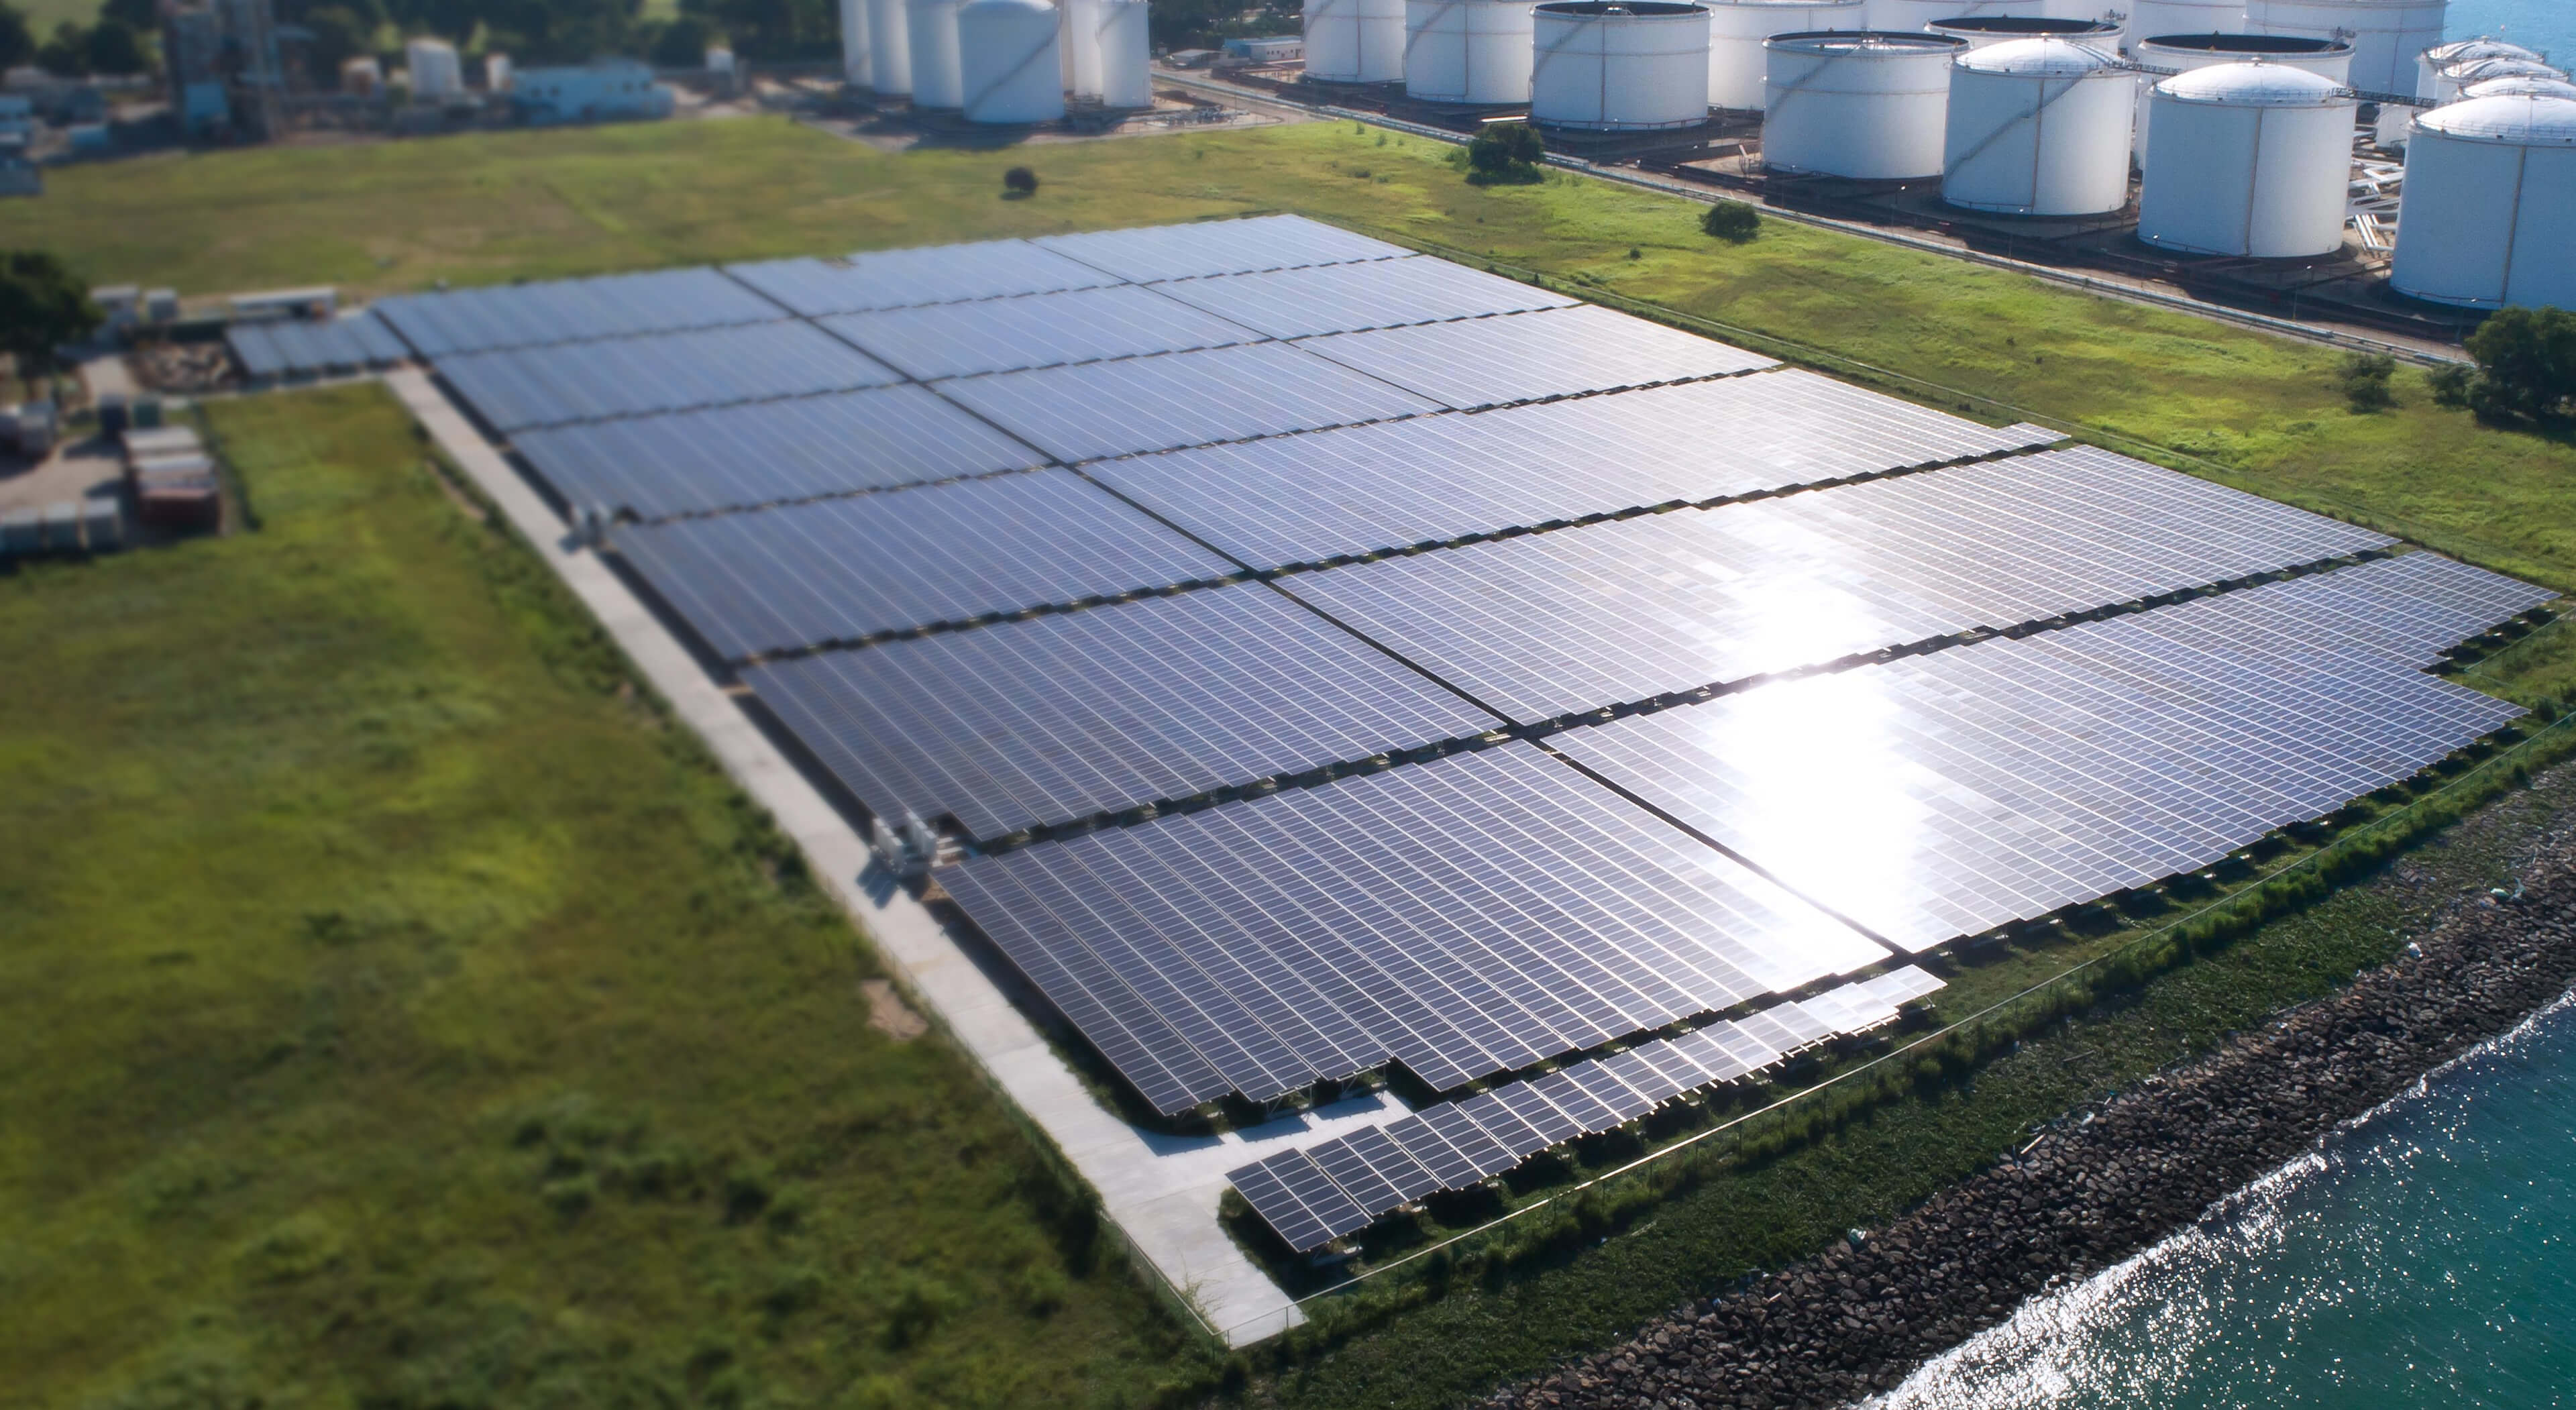 Solar panels generating renewable energy on a large plot of land